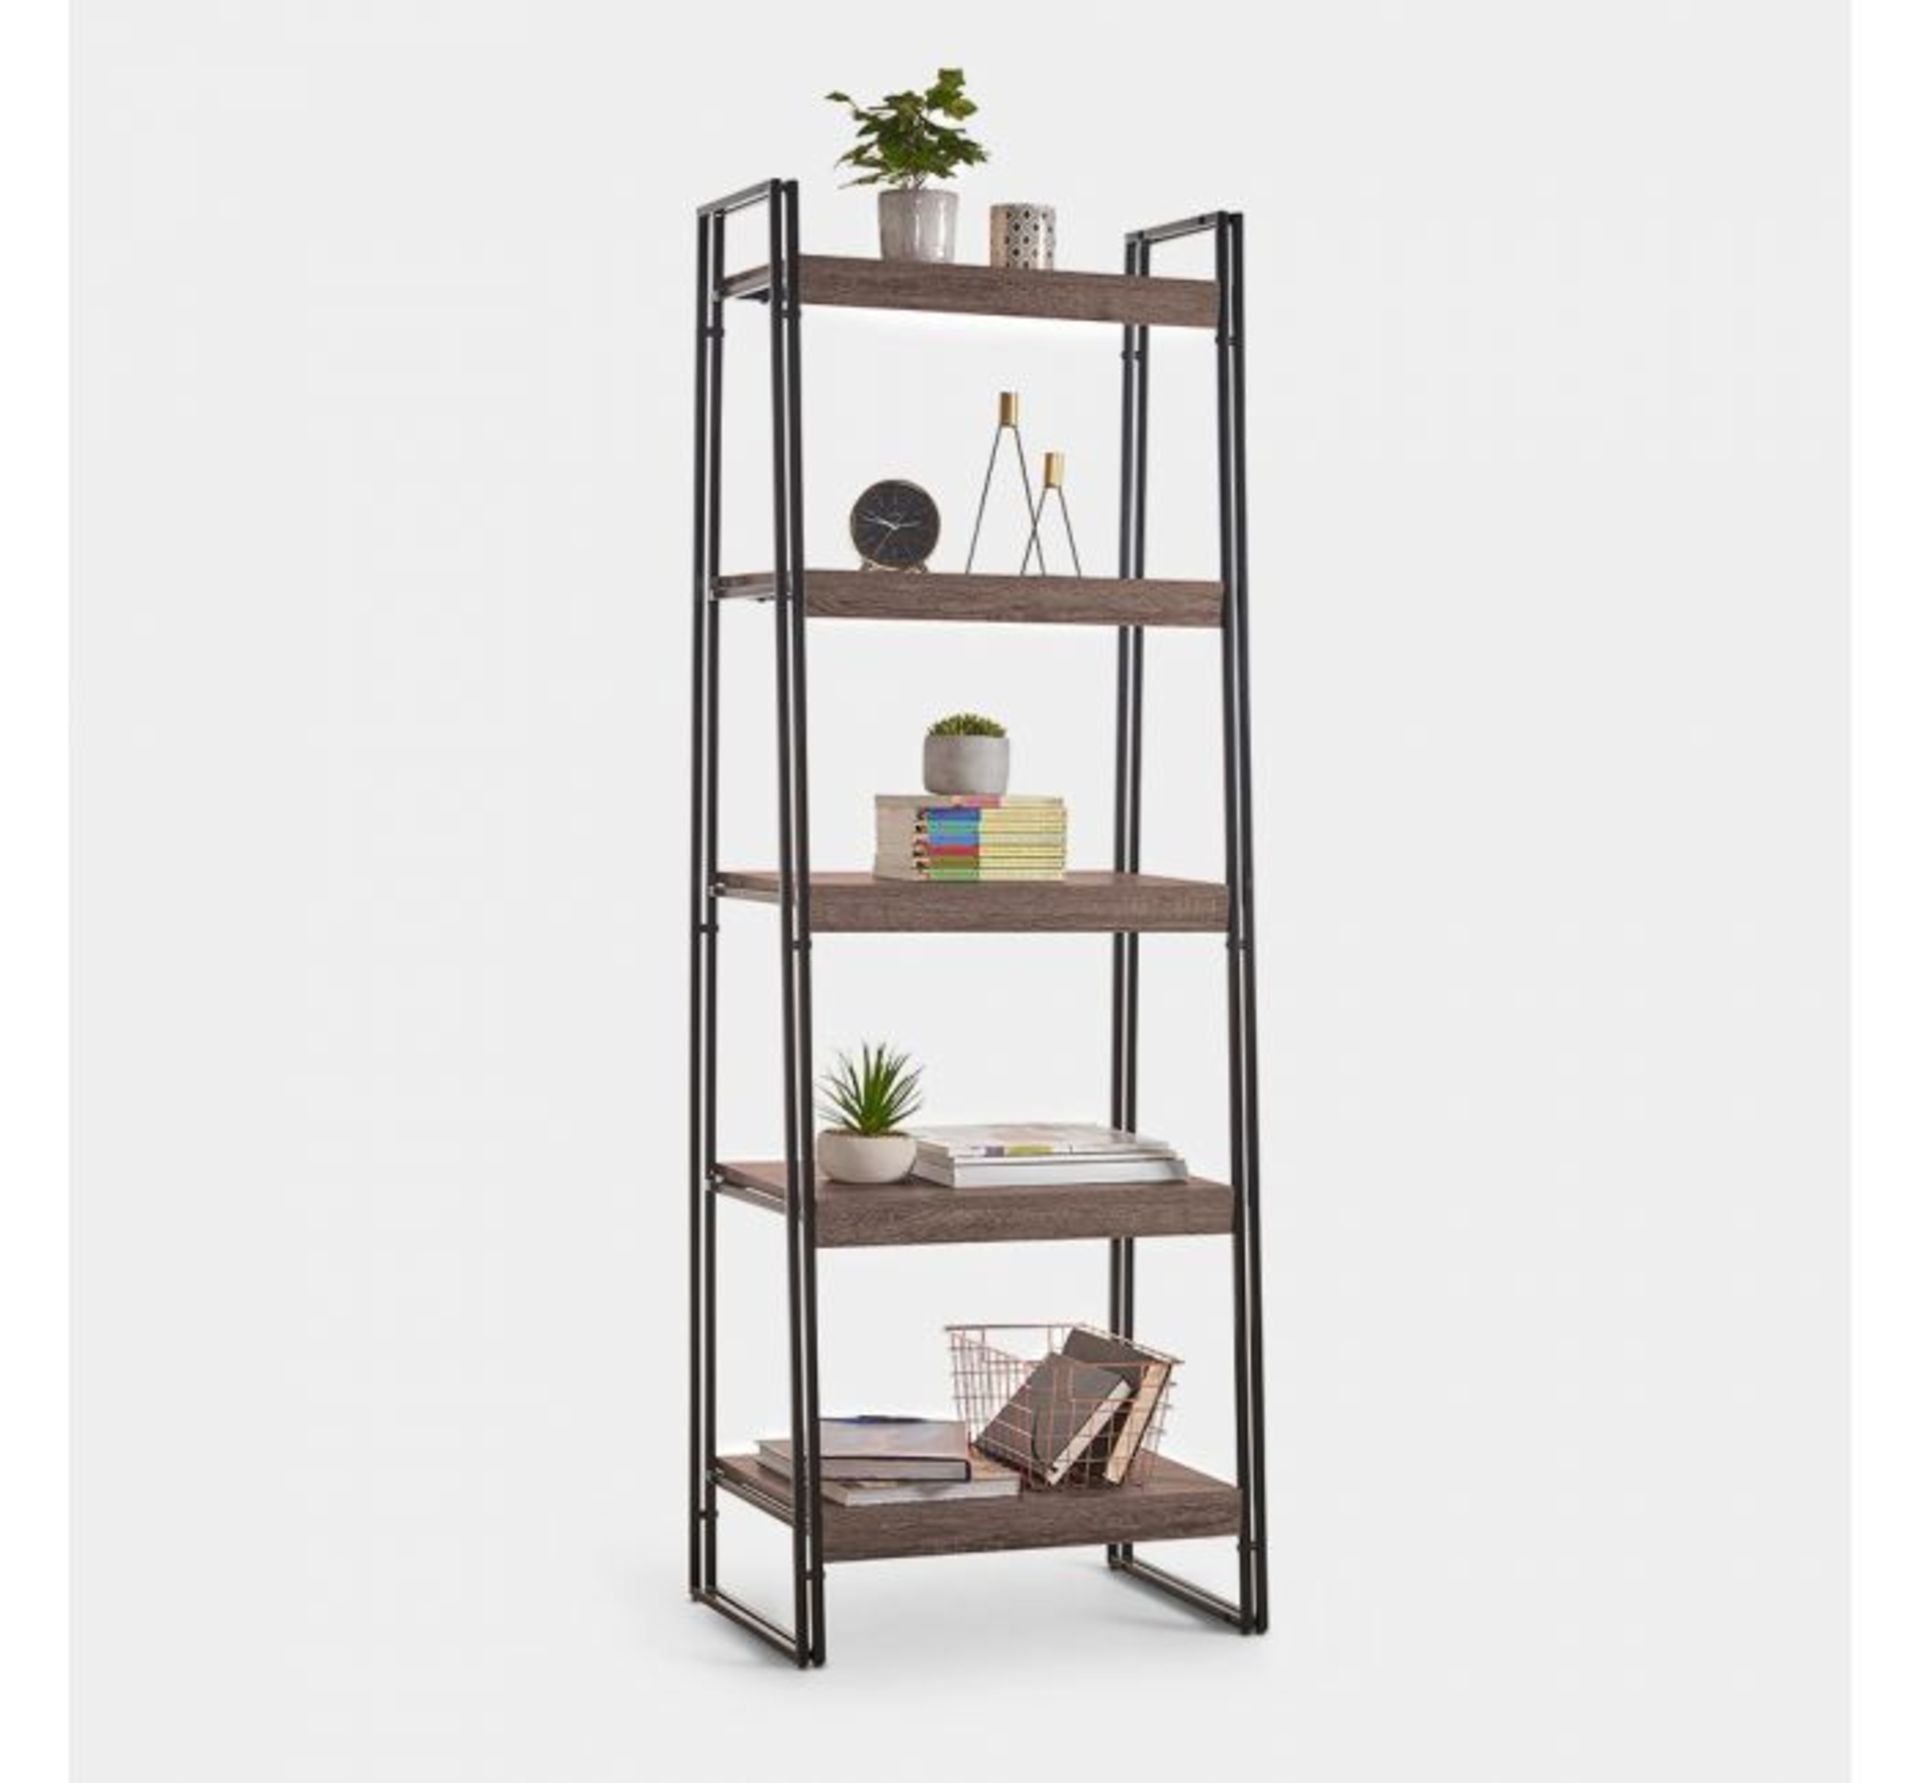 (OM2) Rustic Walnut 5-Tier Shelf Unit Tall shelving unit/bookcase for books, plants, ornaments... - Image 2 of 2